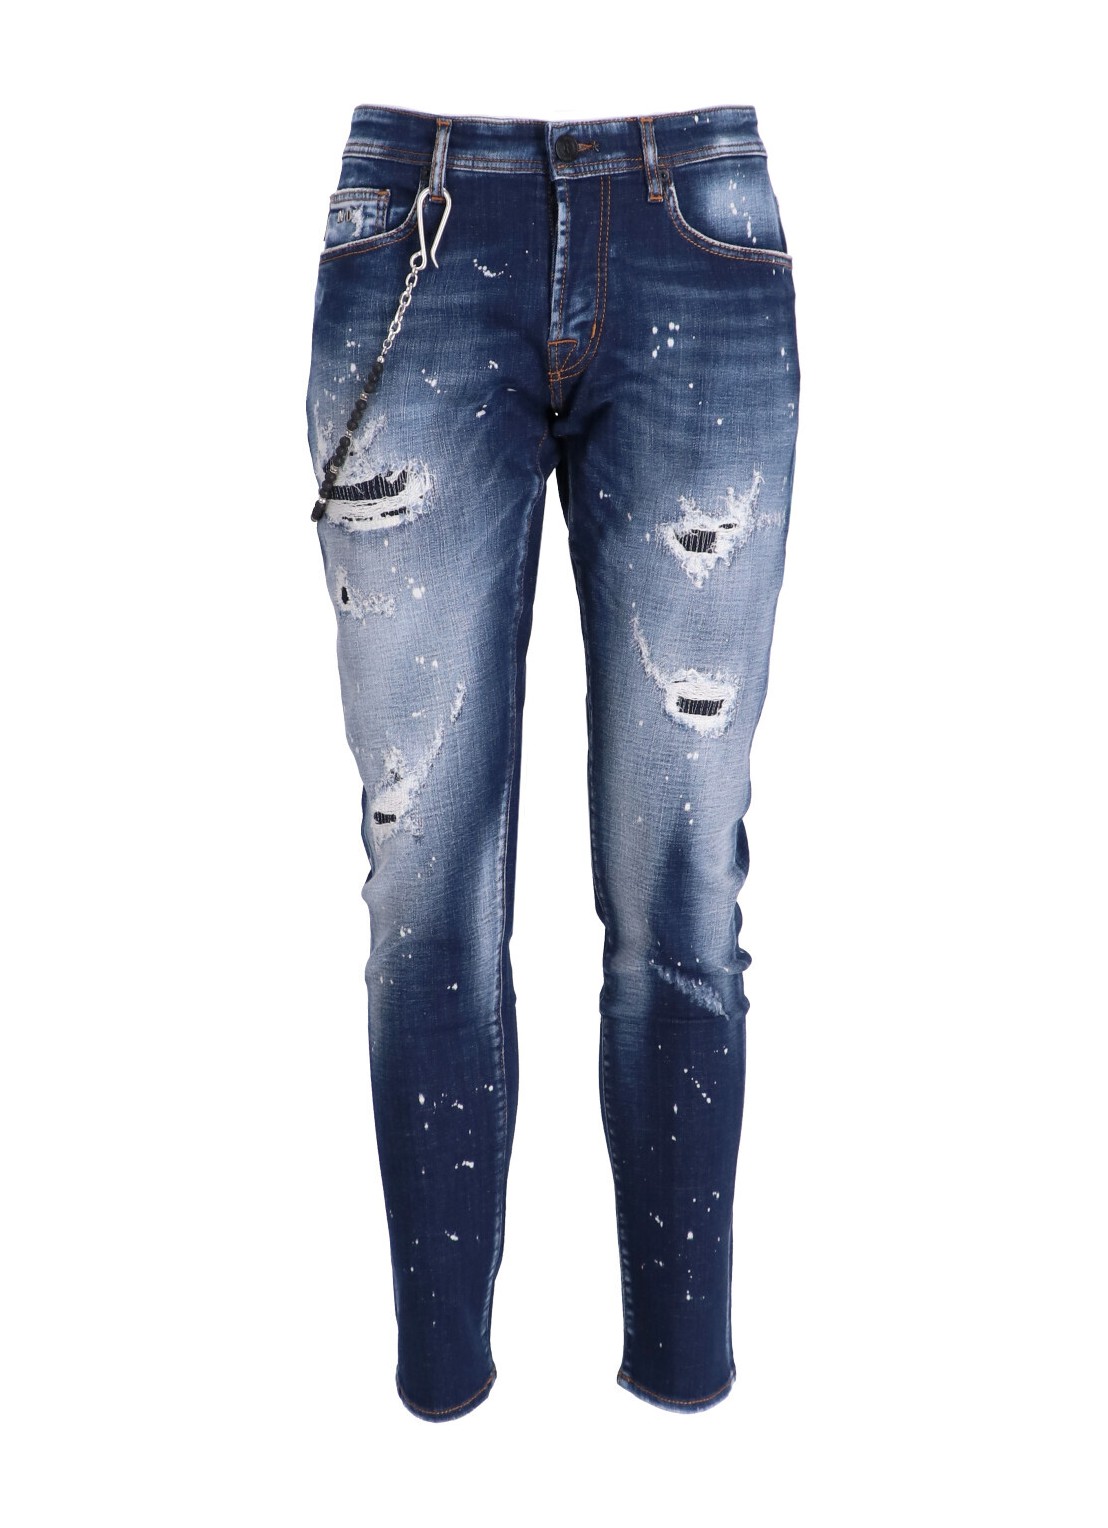 Pantalon jeans tramarossa denim man 1980 1980 23127 talla Azul
 